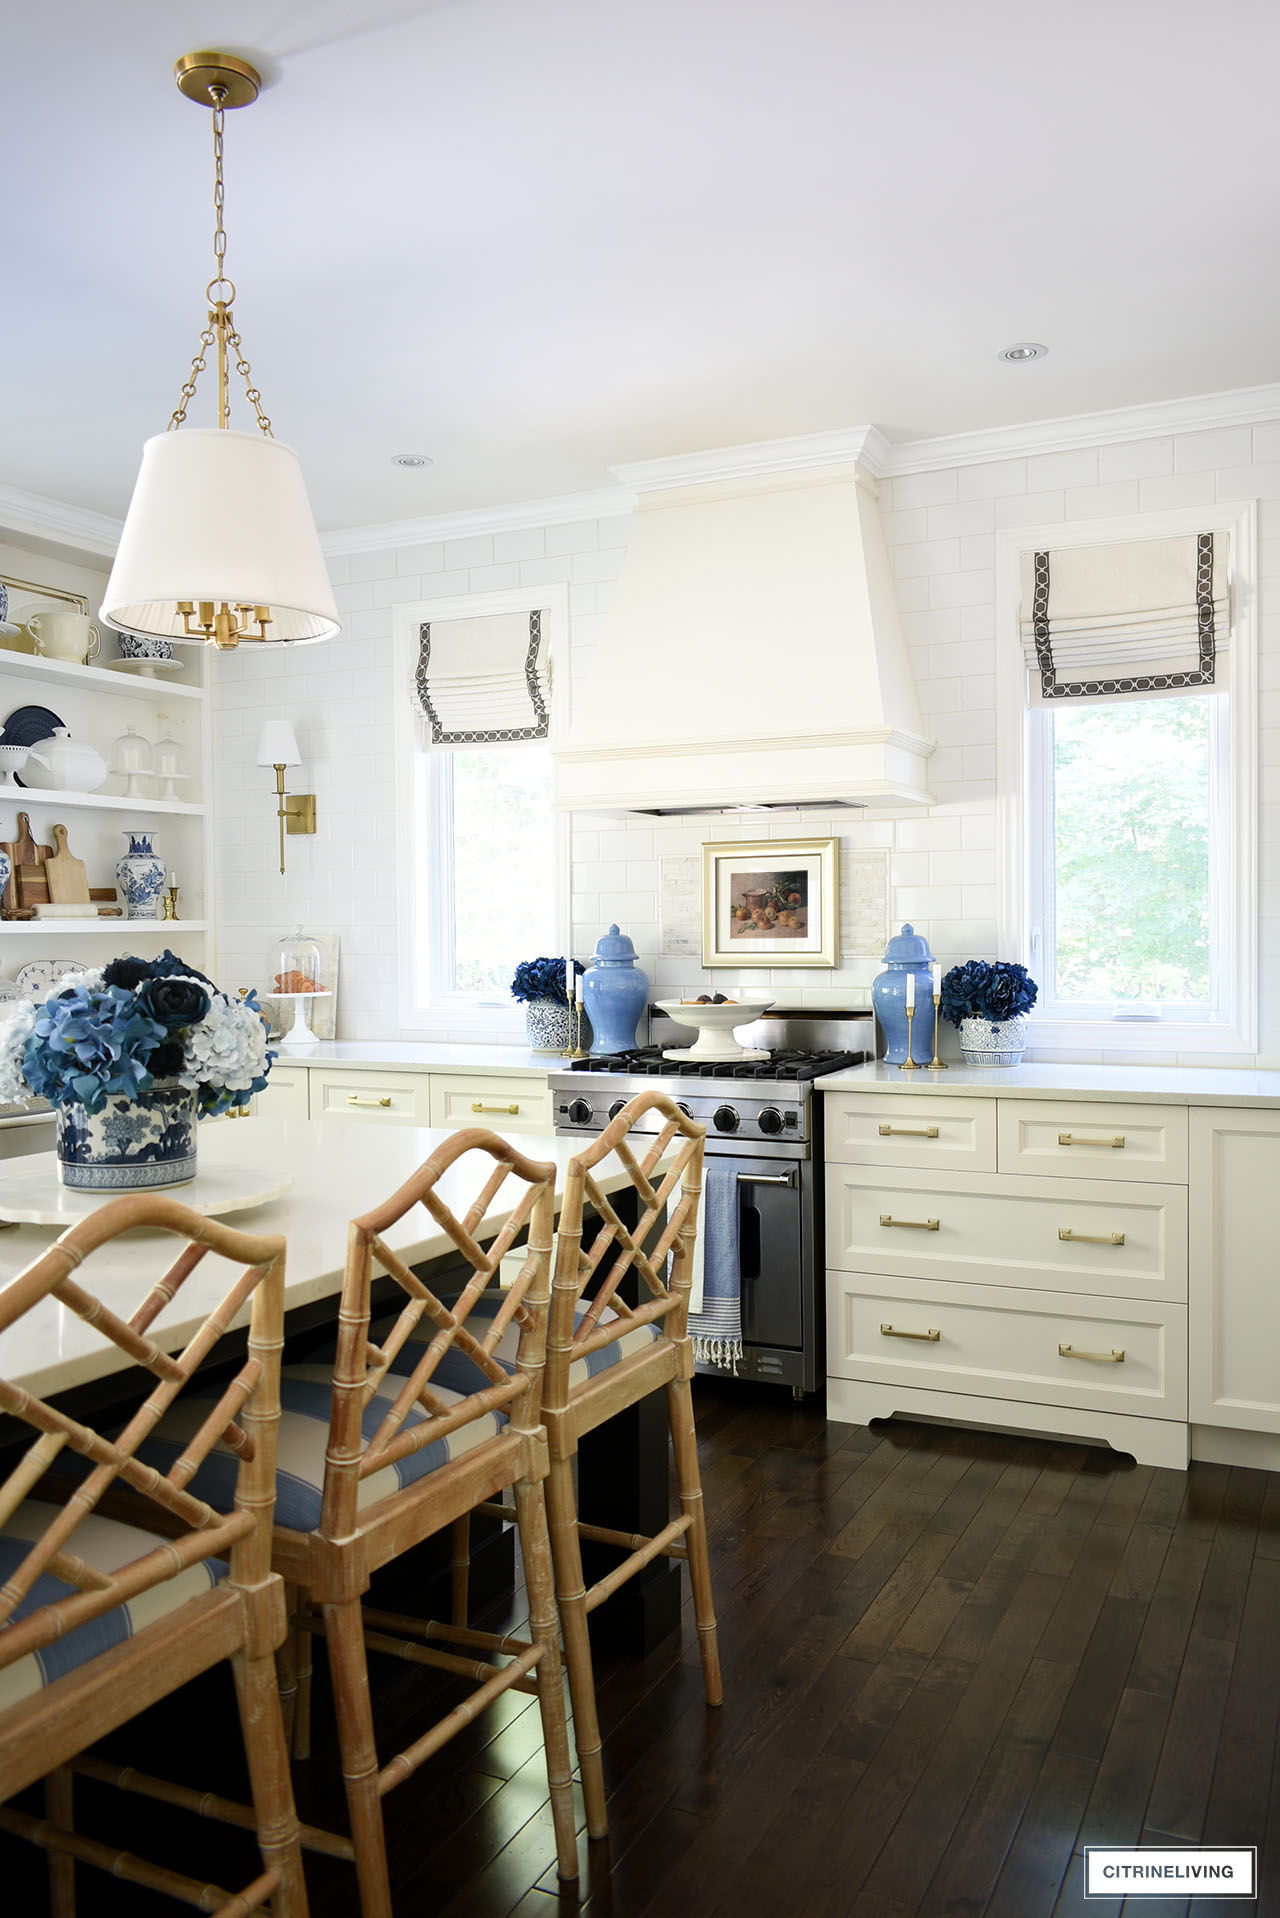 Elegant fall kitchen decor using vintage framed art, natural elements like fresh fruit and baked goods, blue floral arrangements and gold accents.